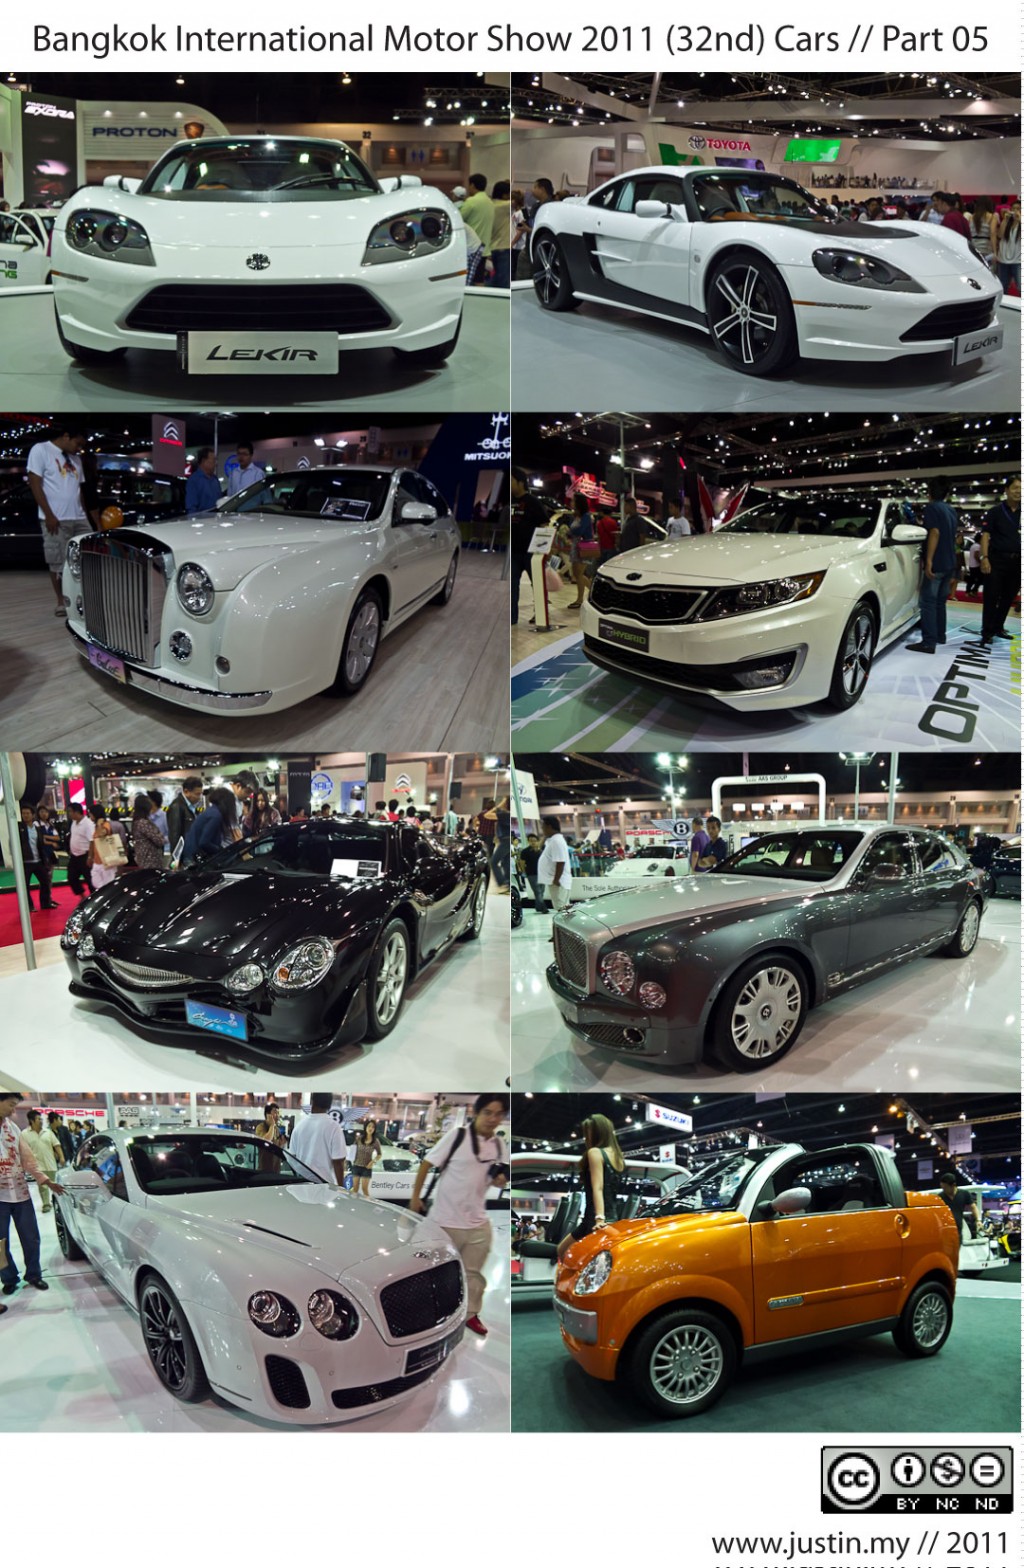 Bangkok-International-Motor-Show-2011-Cars-05 – Justin.my1024 x 1568